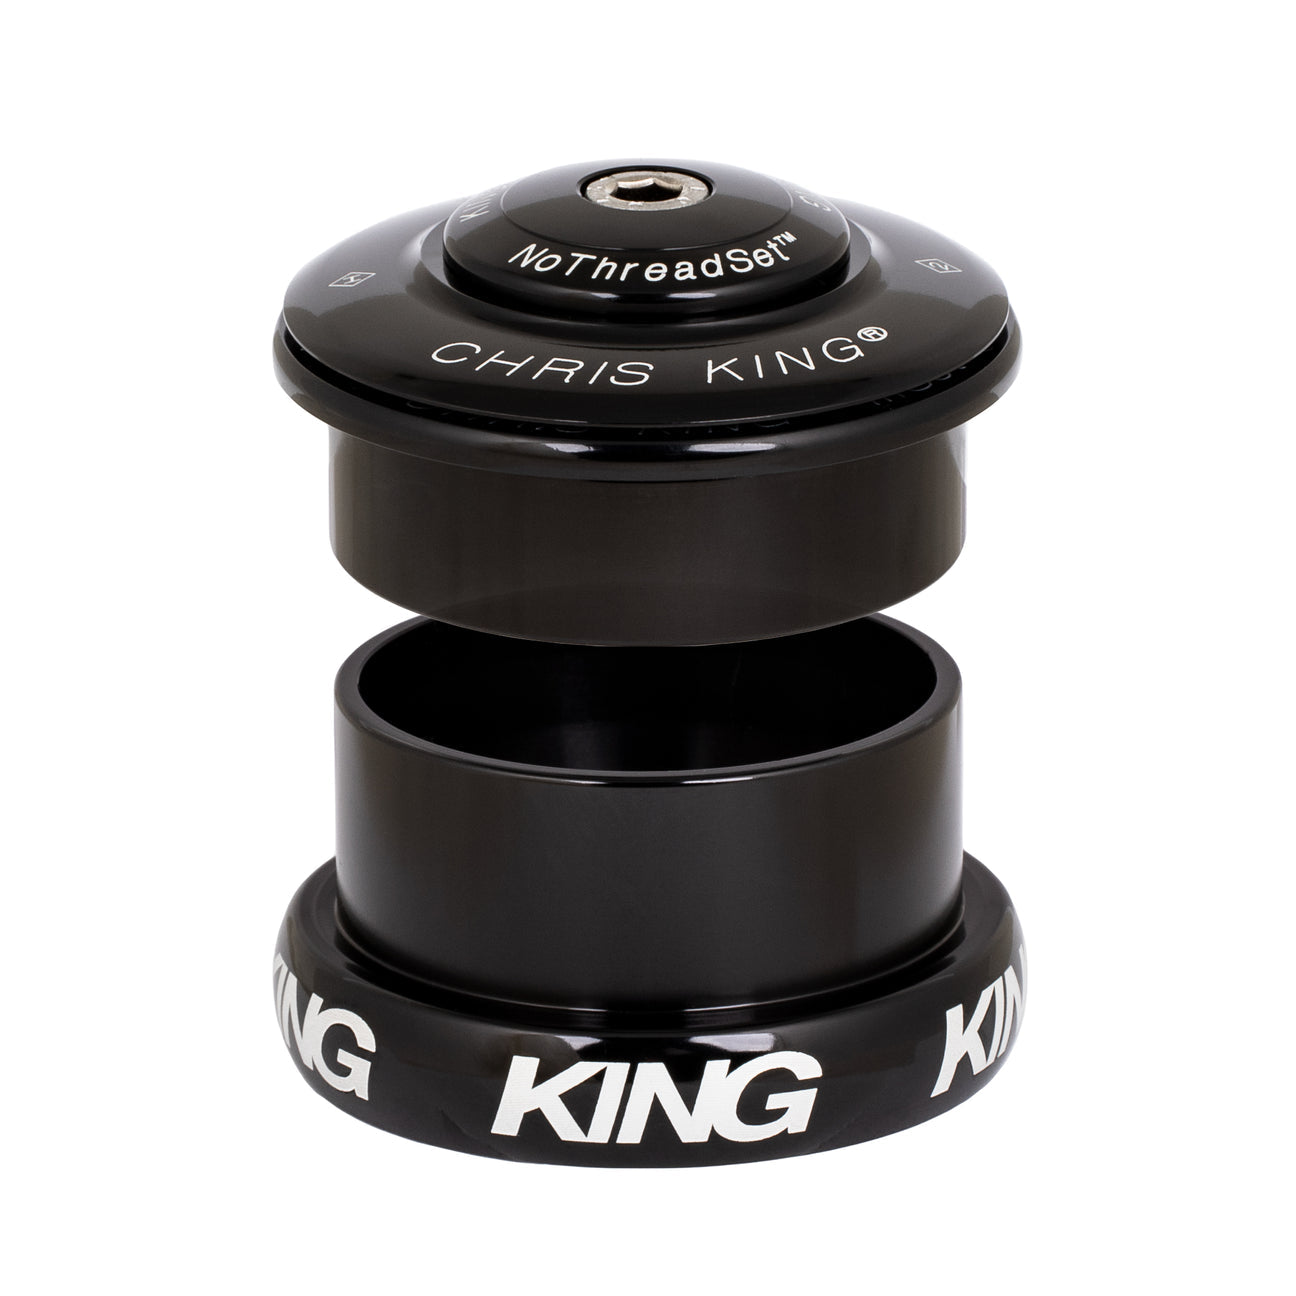 Chris King Inset 5 headset in black